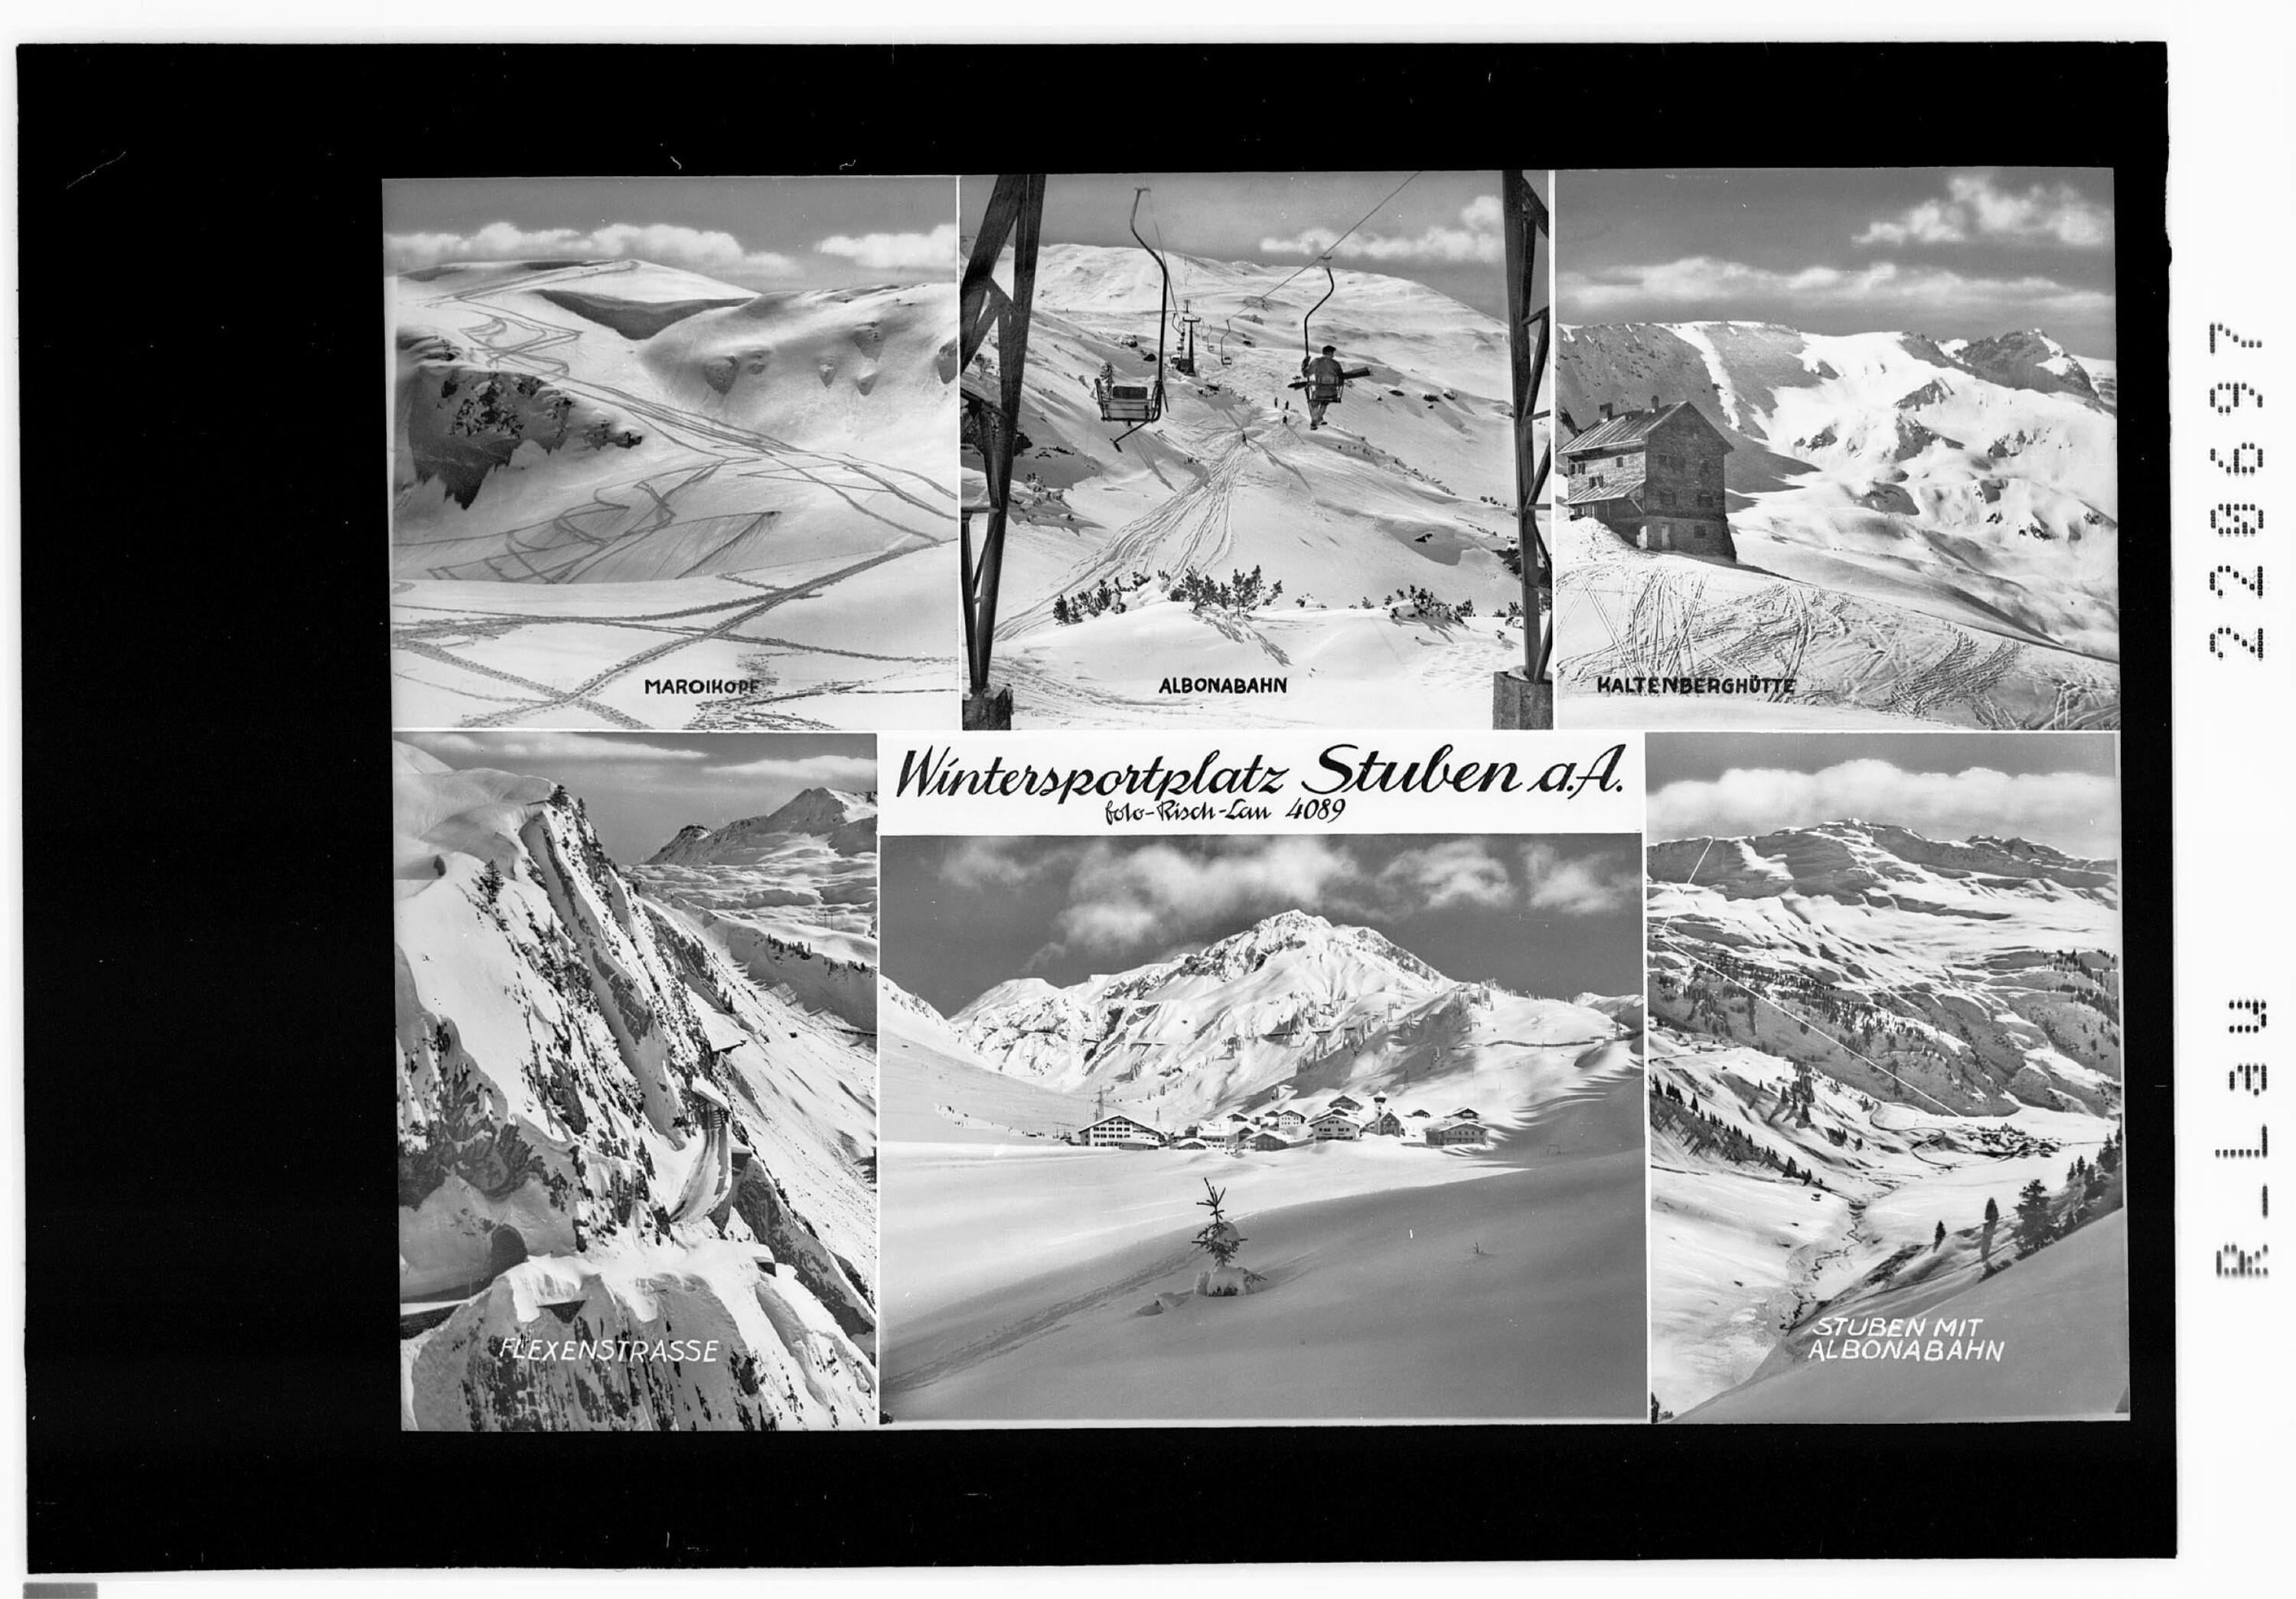 Wintersportplatz Stuben am Arlberg></div>


    <hr>
    <div class=